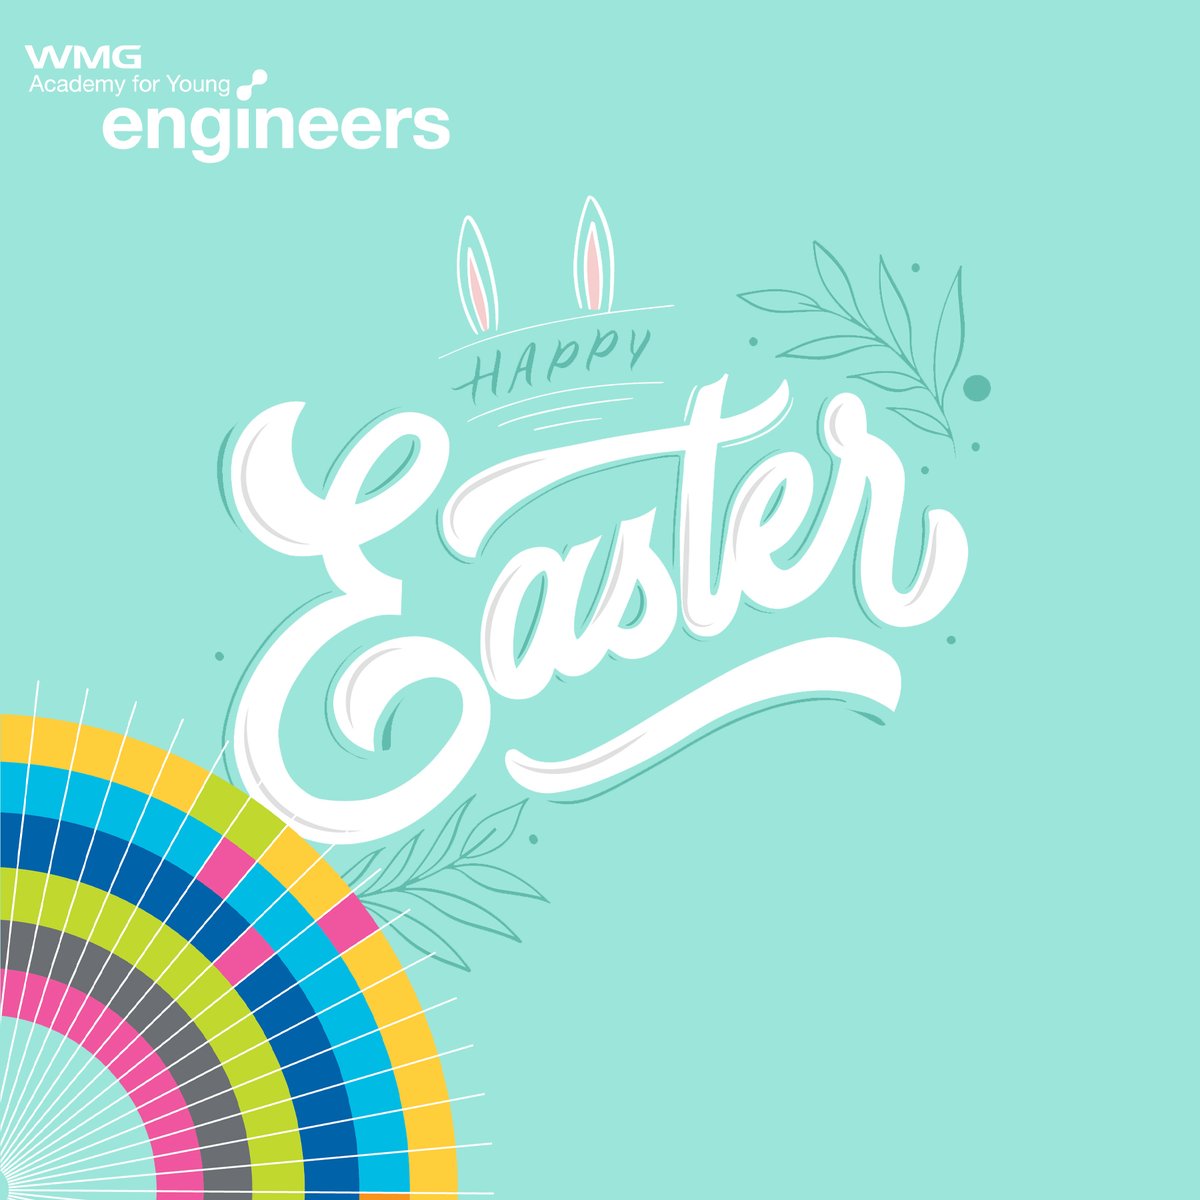 Wishing you all a restful break over the Easter holidays.

#WMGAcademy #EasterHolidays #HappyEaster